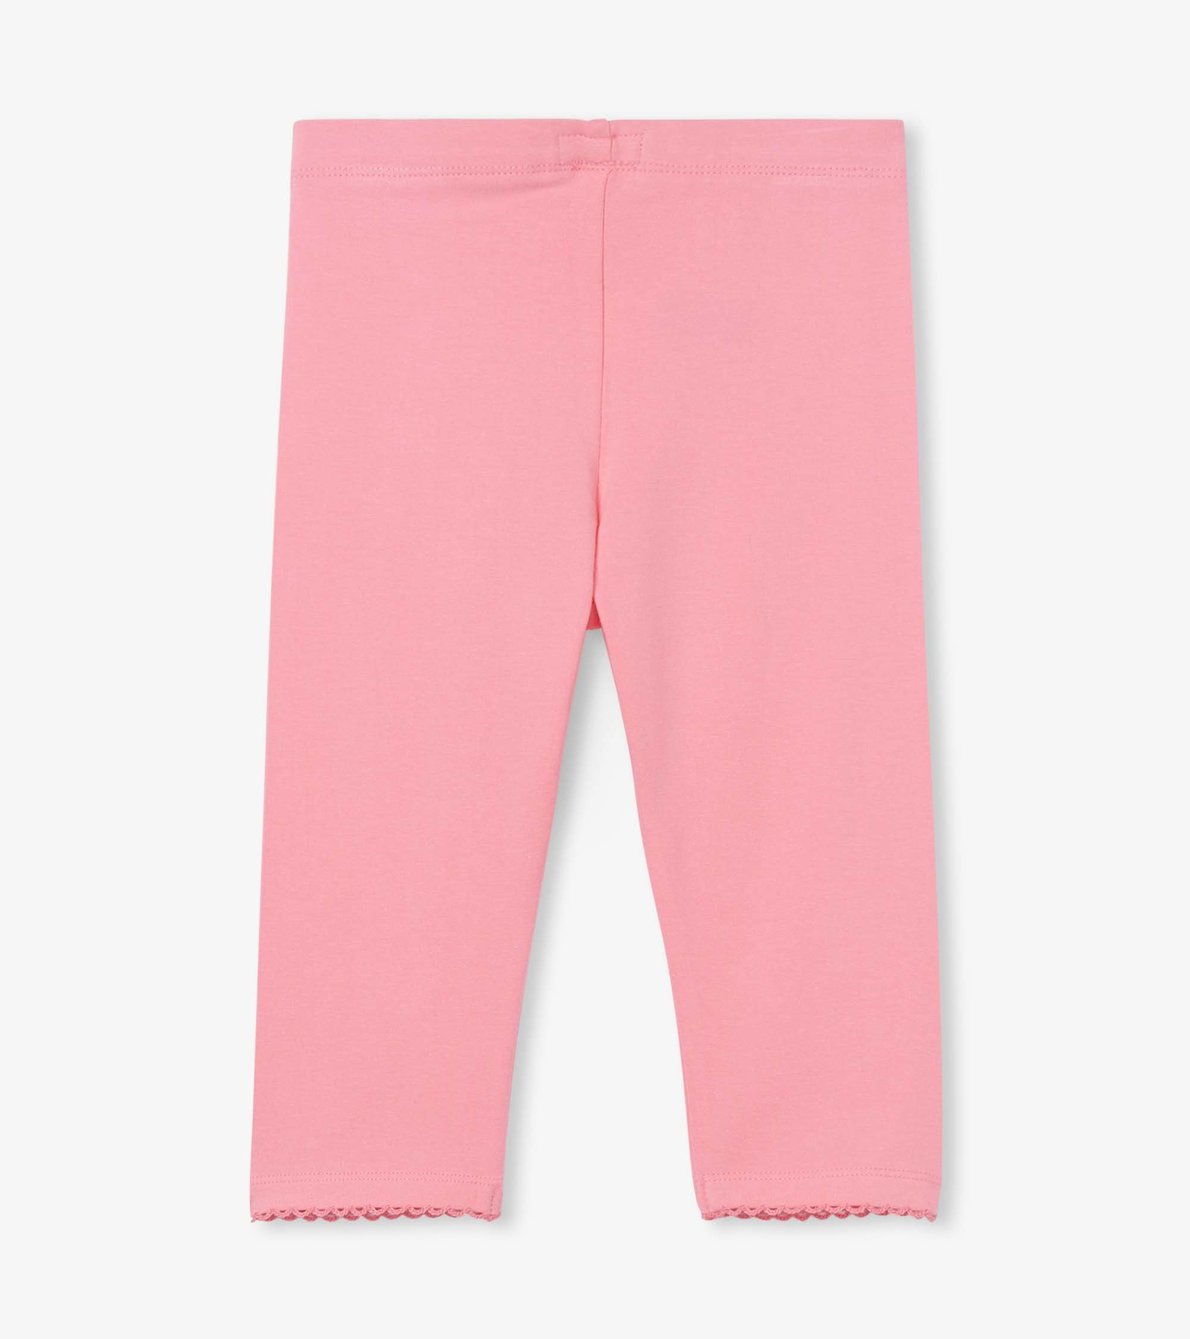 View larger image of Light Pink Capri Leggings